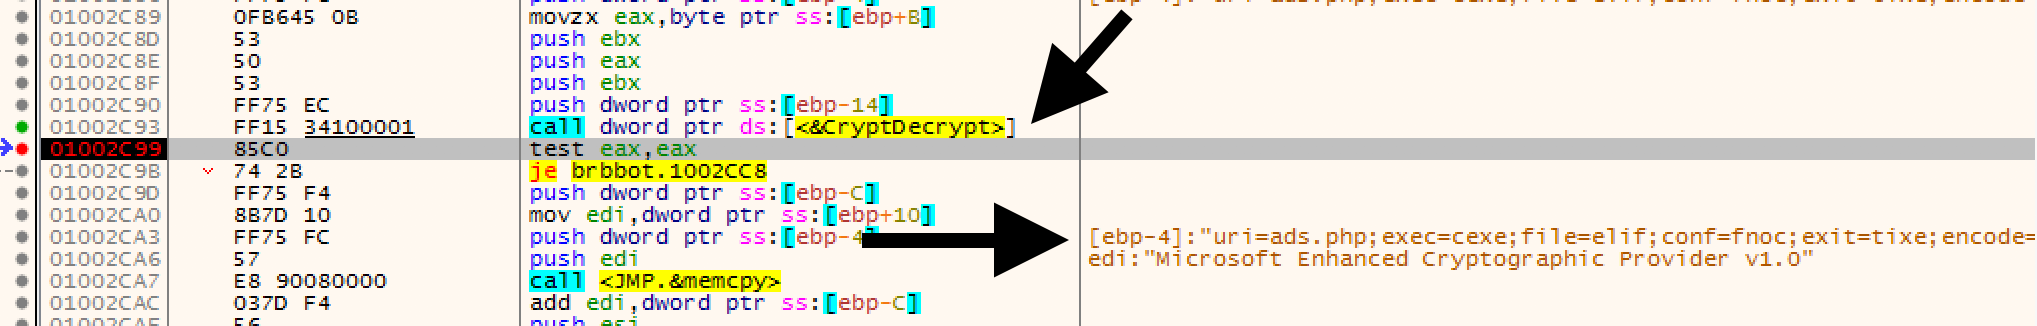 CryptDecrypt